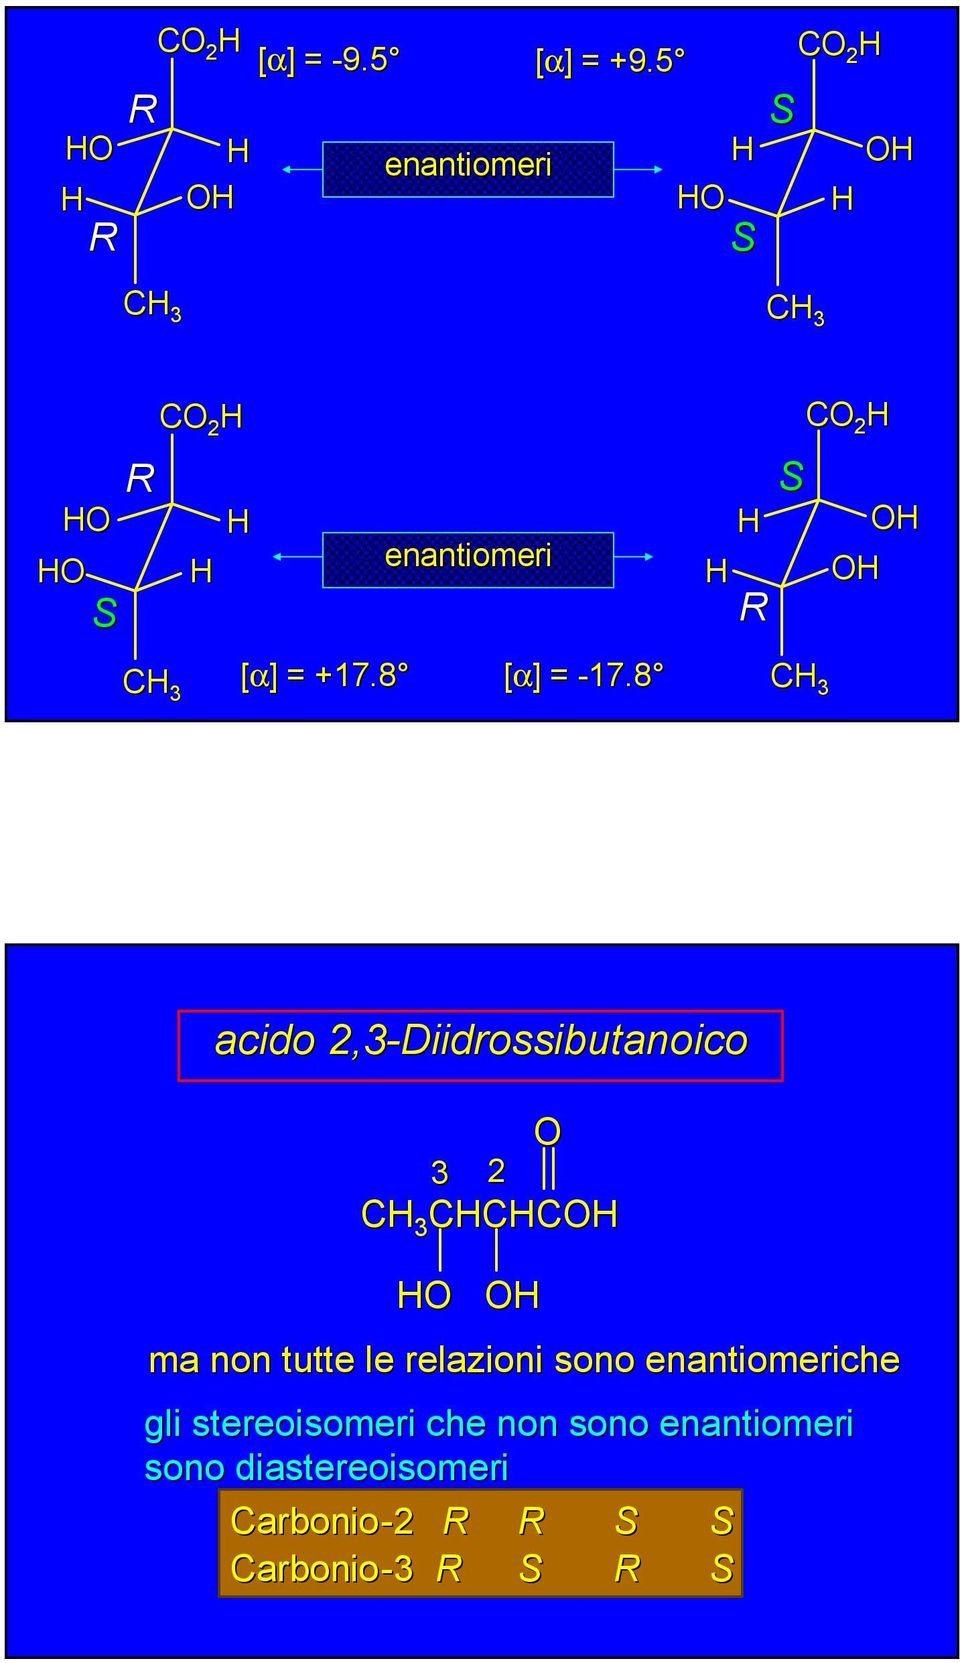 8 enantiomeri enantiomeri [α]] = -17.